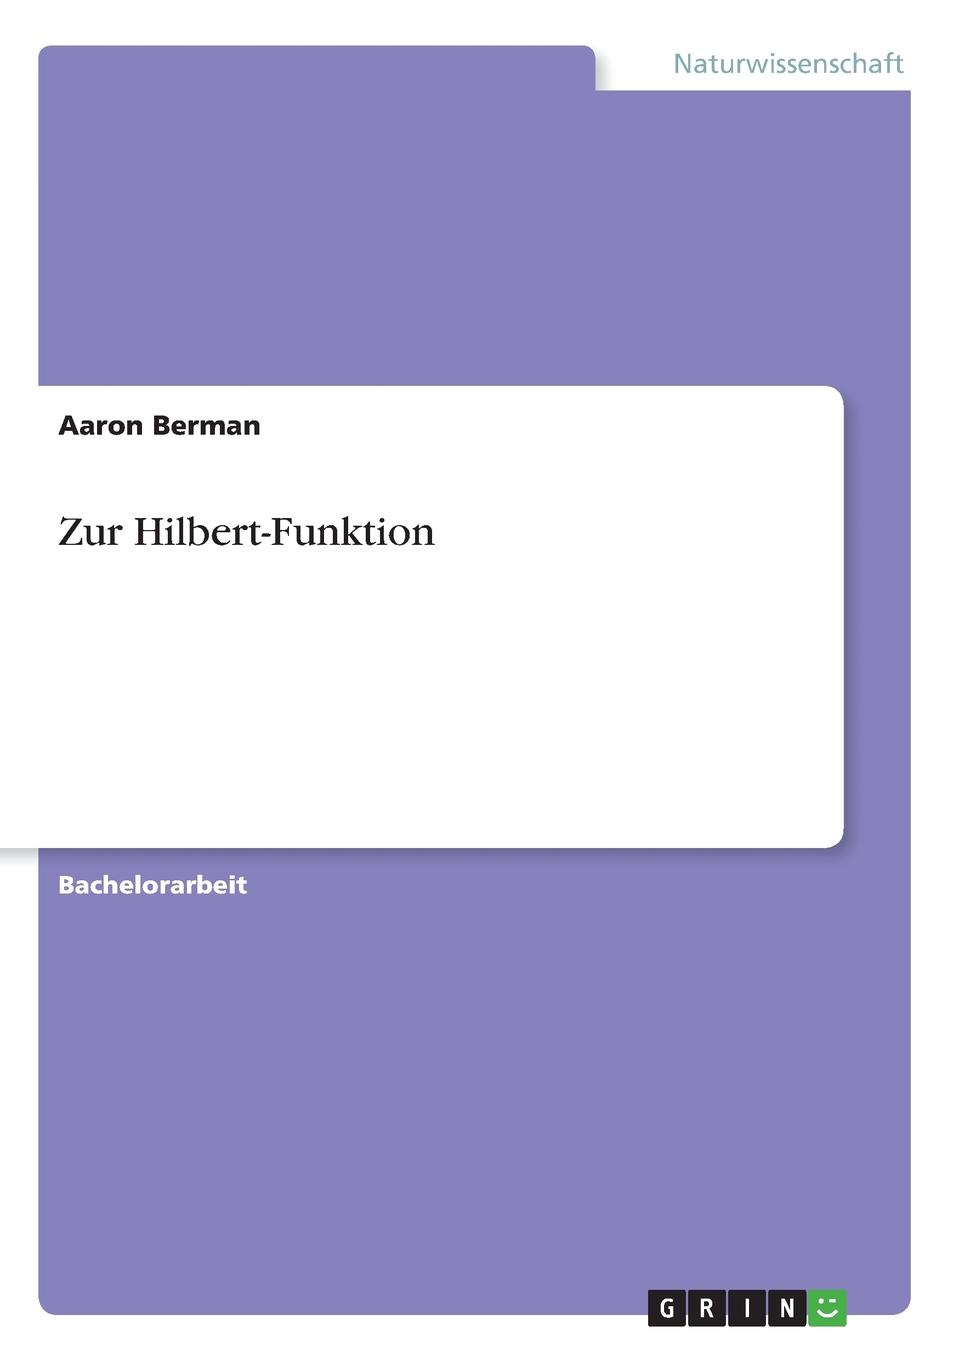 Aaron Berman Zur Hilbert-Funktion